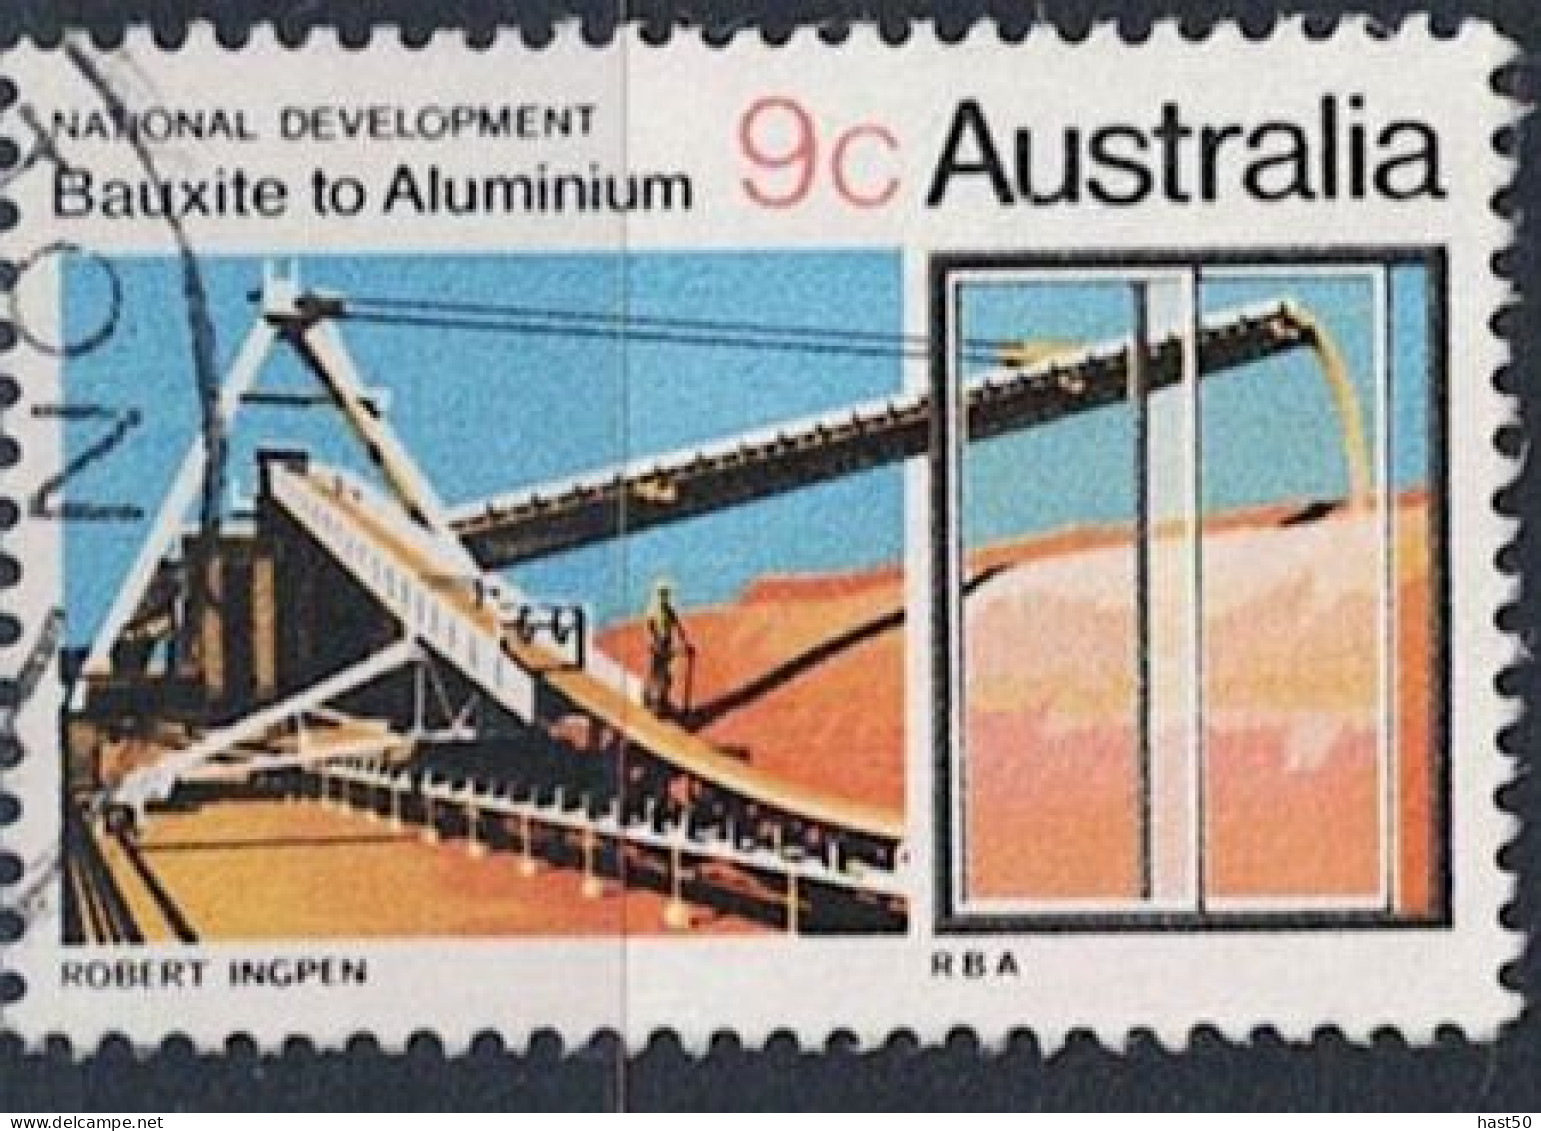 Australien Australia - Bauxit-Förderanlage / Aluminiumfenster (MiNr: 448) 1970 - Gest Used Obl - Used Stamps